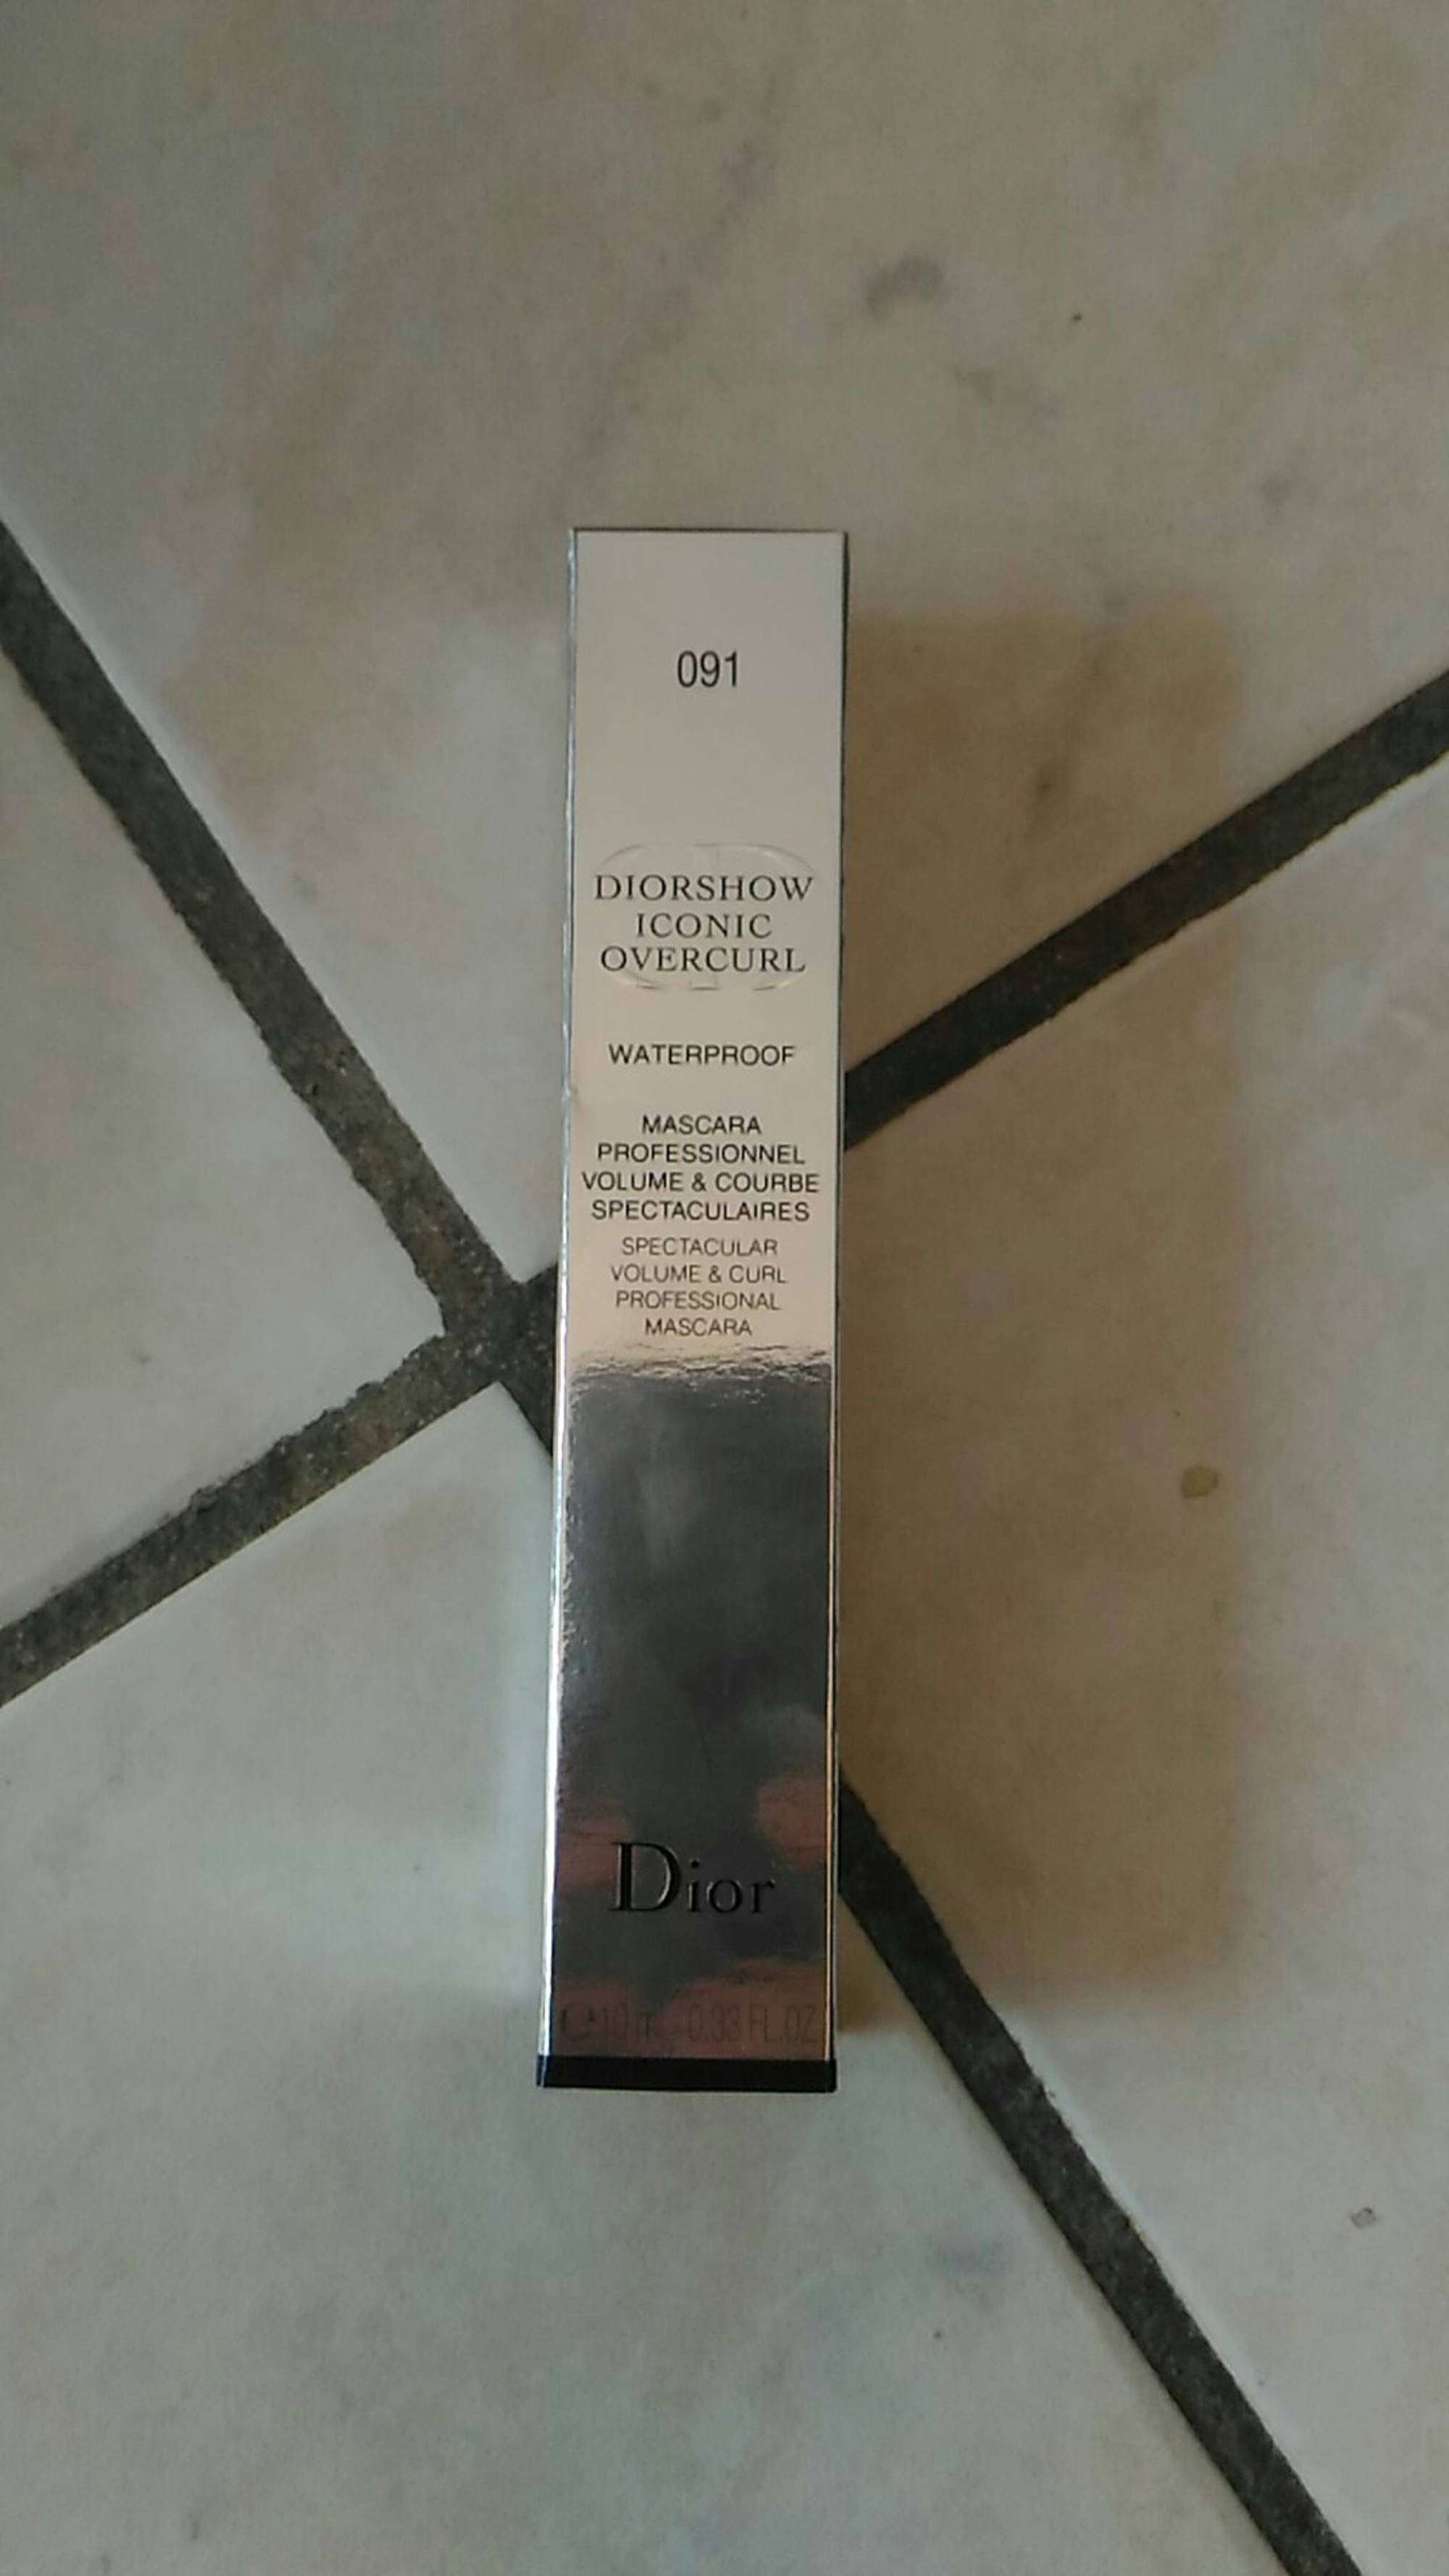 DIOR - Diorshow Iconic overcurl - Mascara